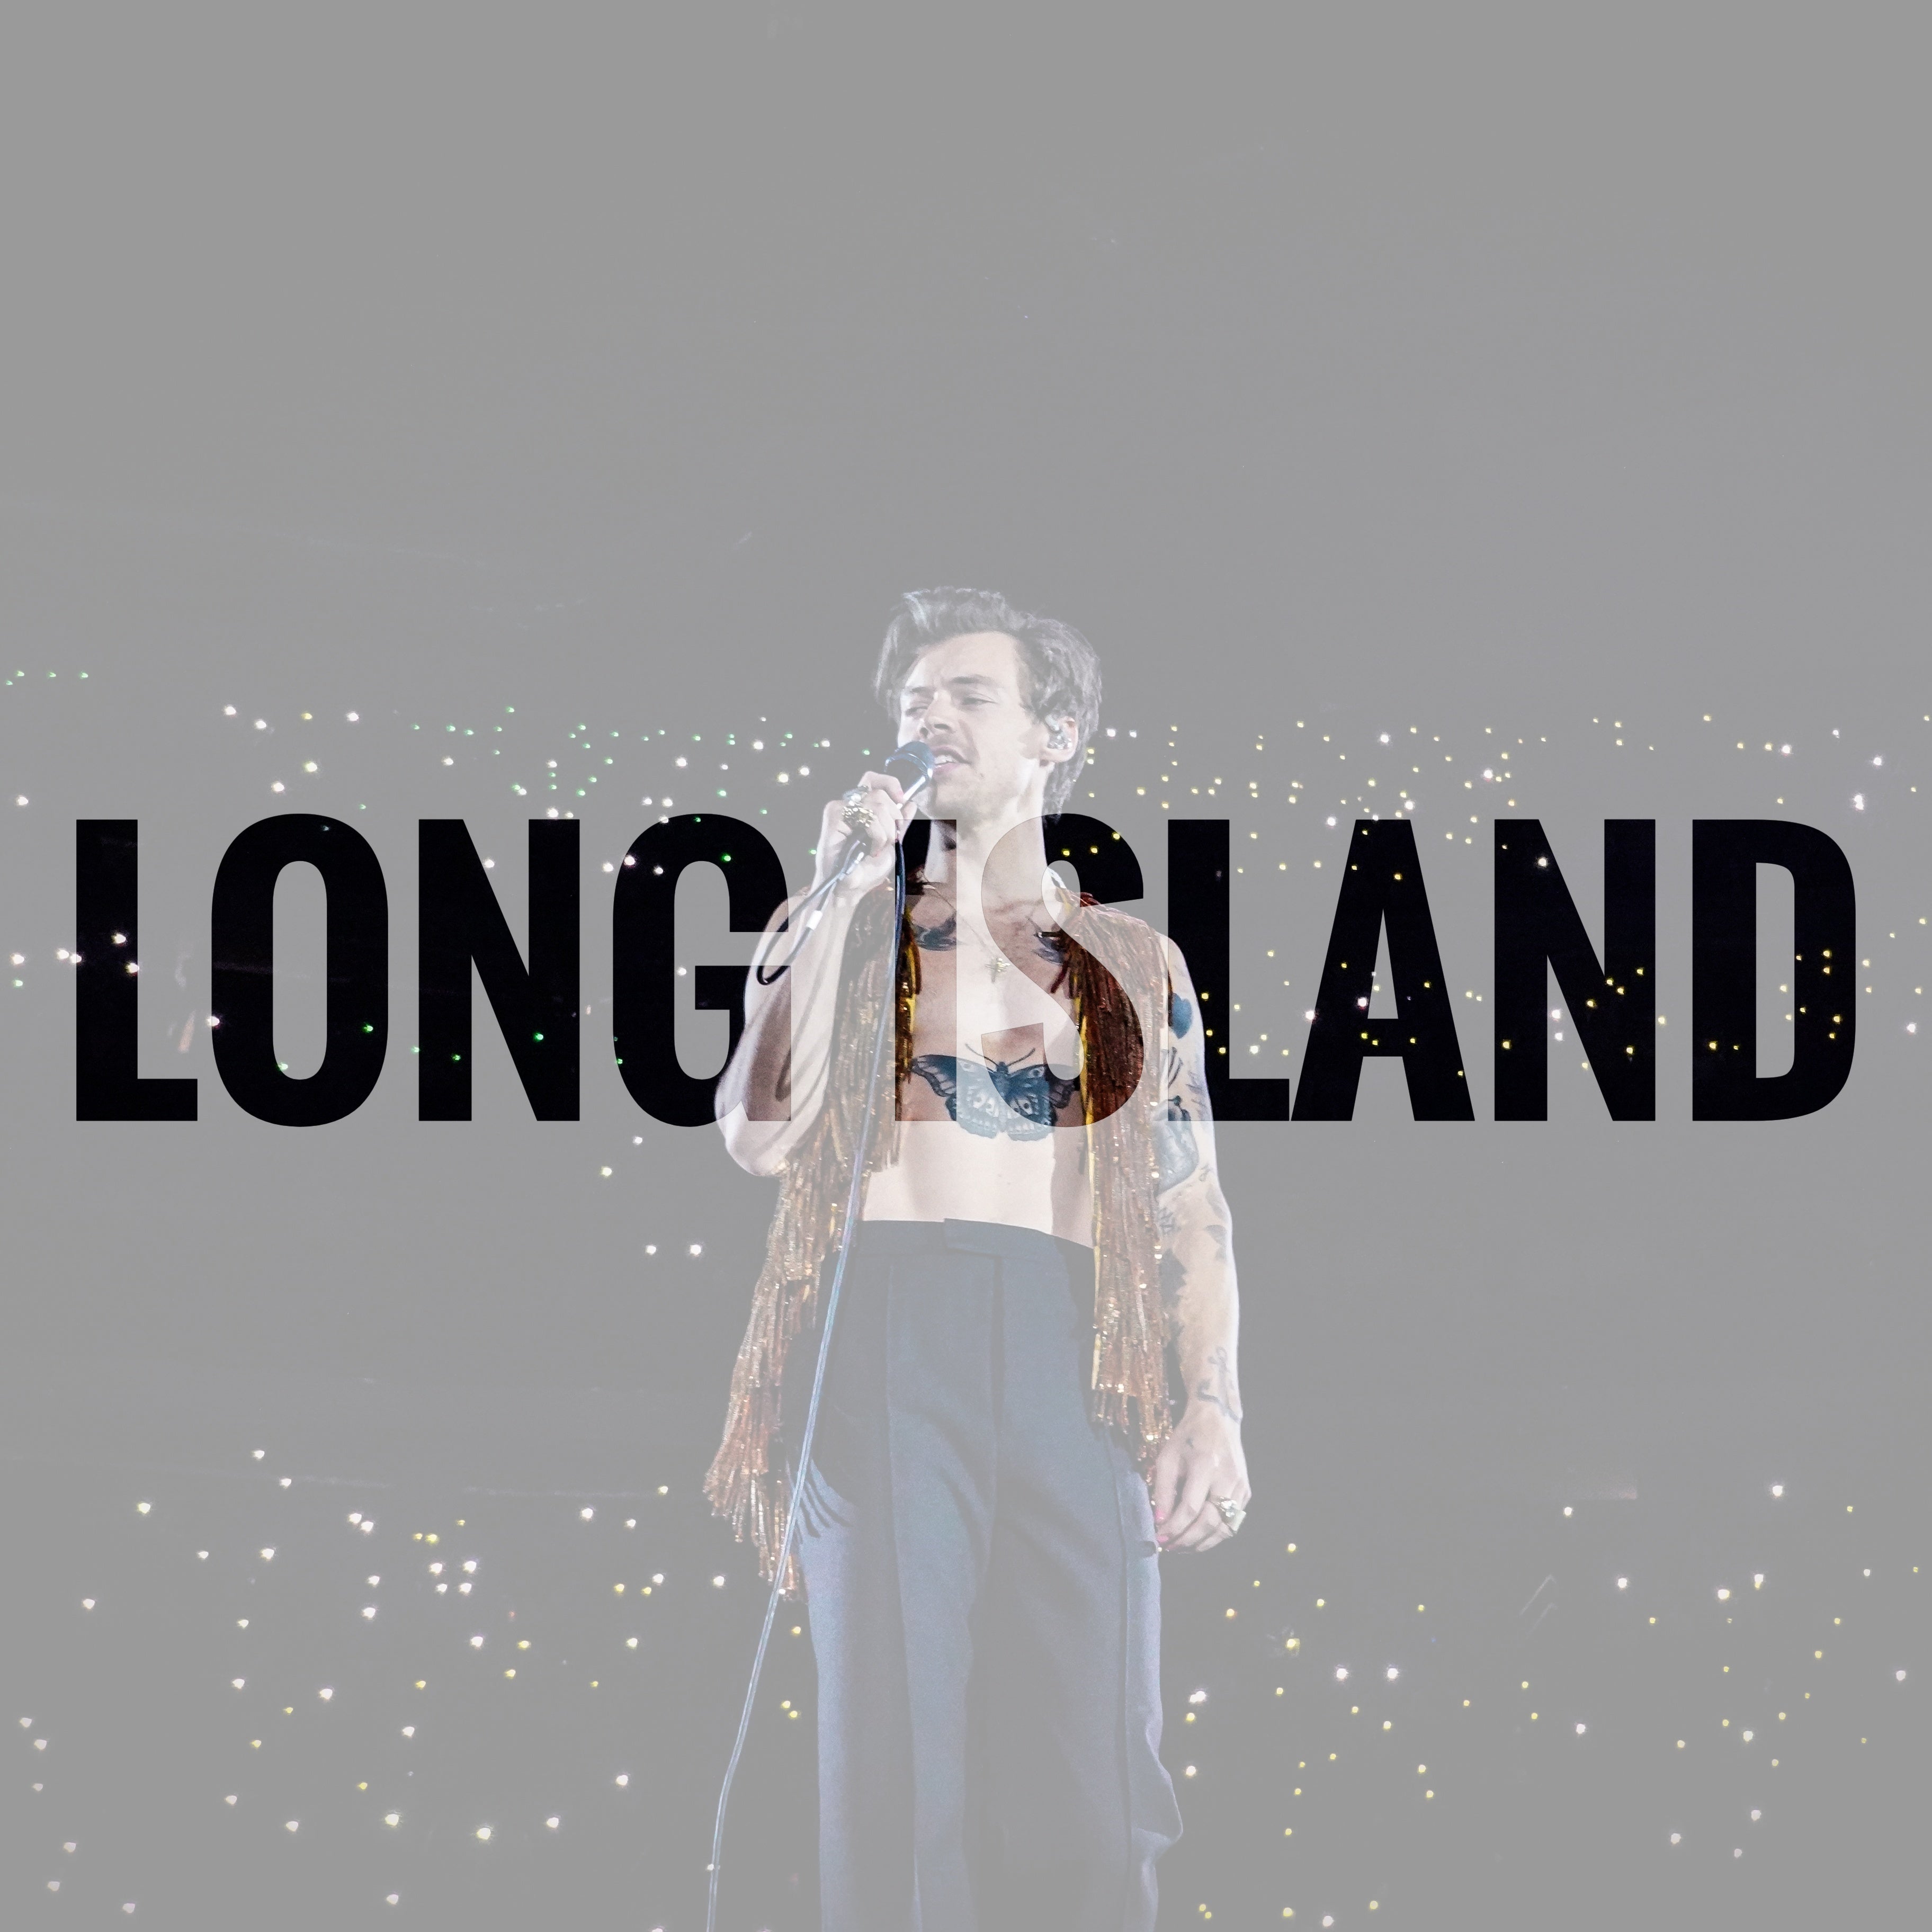 Harry HS Love On Tour Long Island Poster Print 8x10